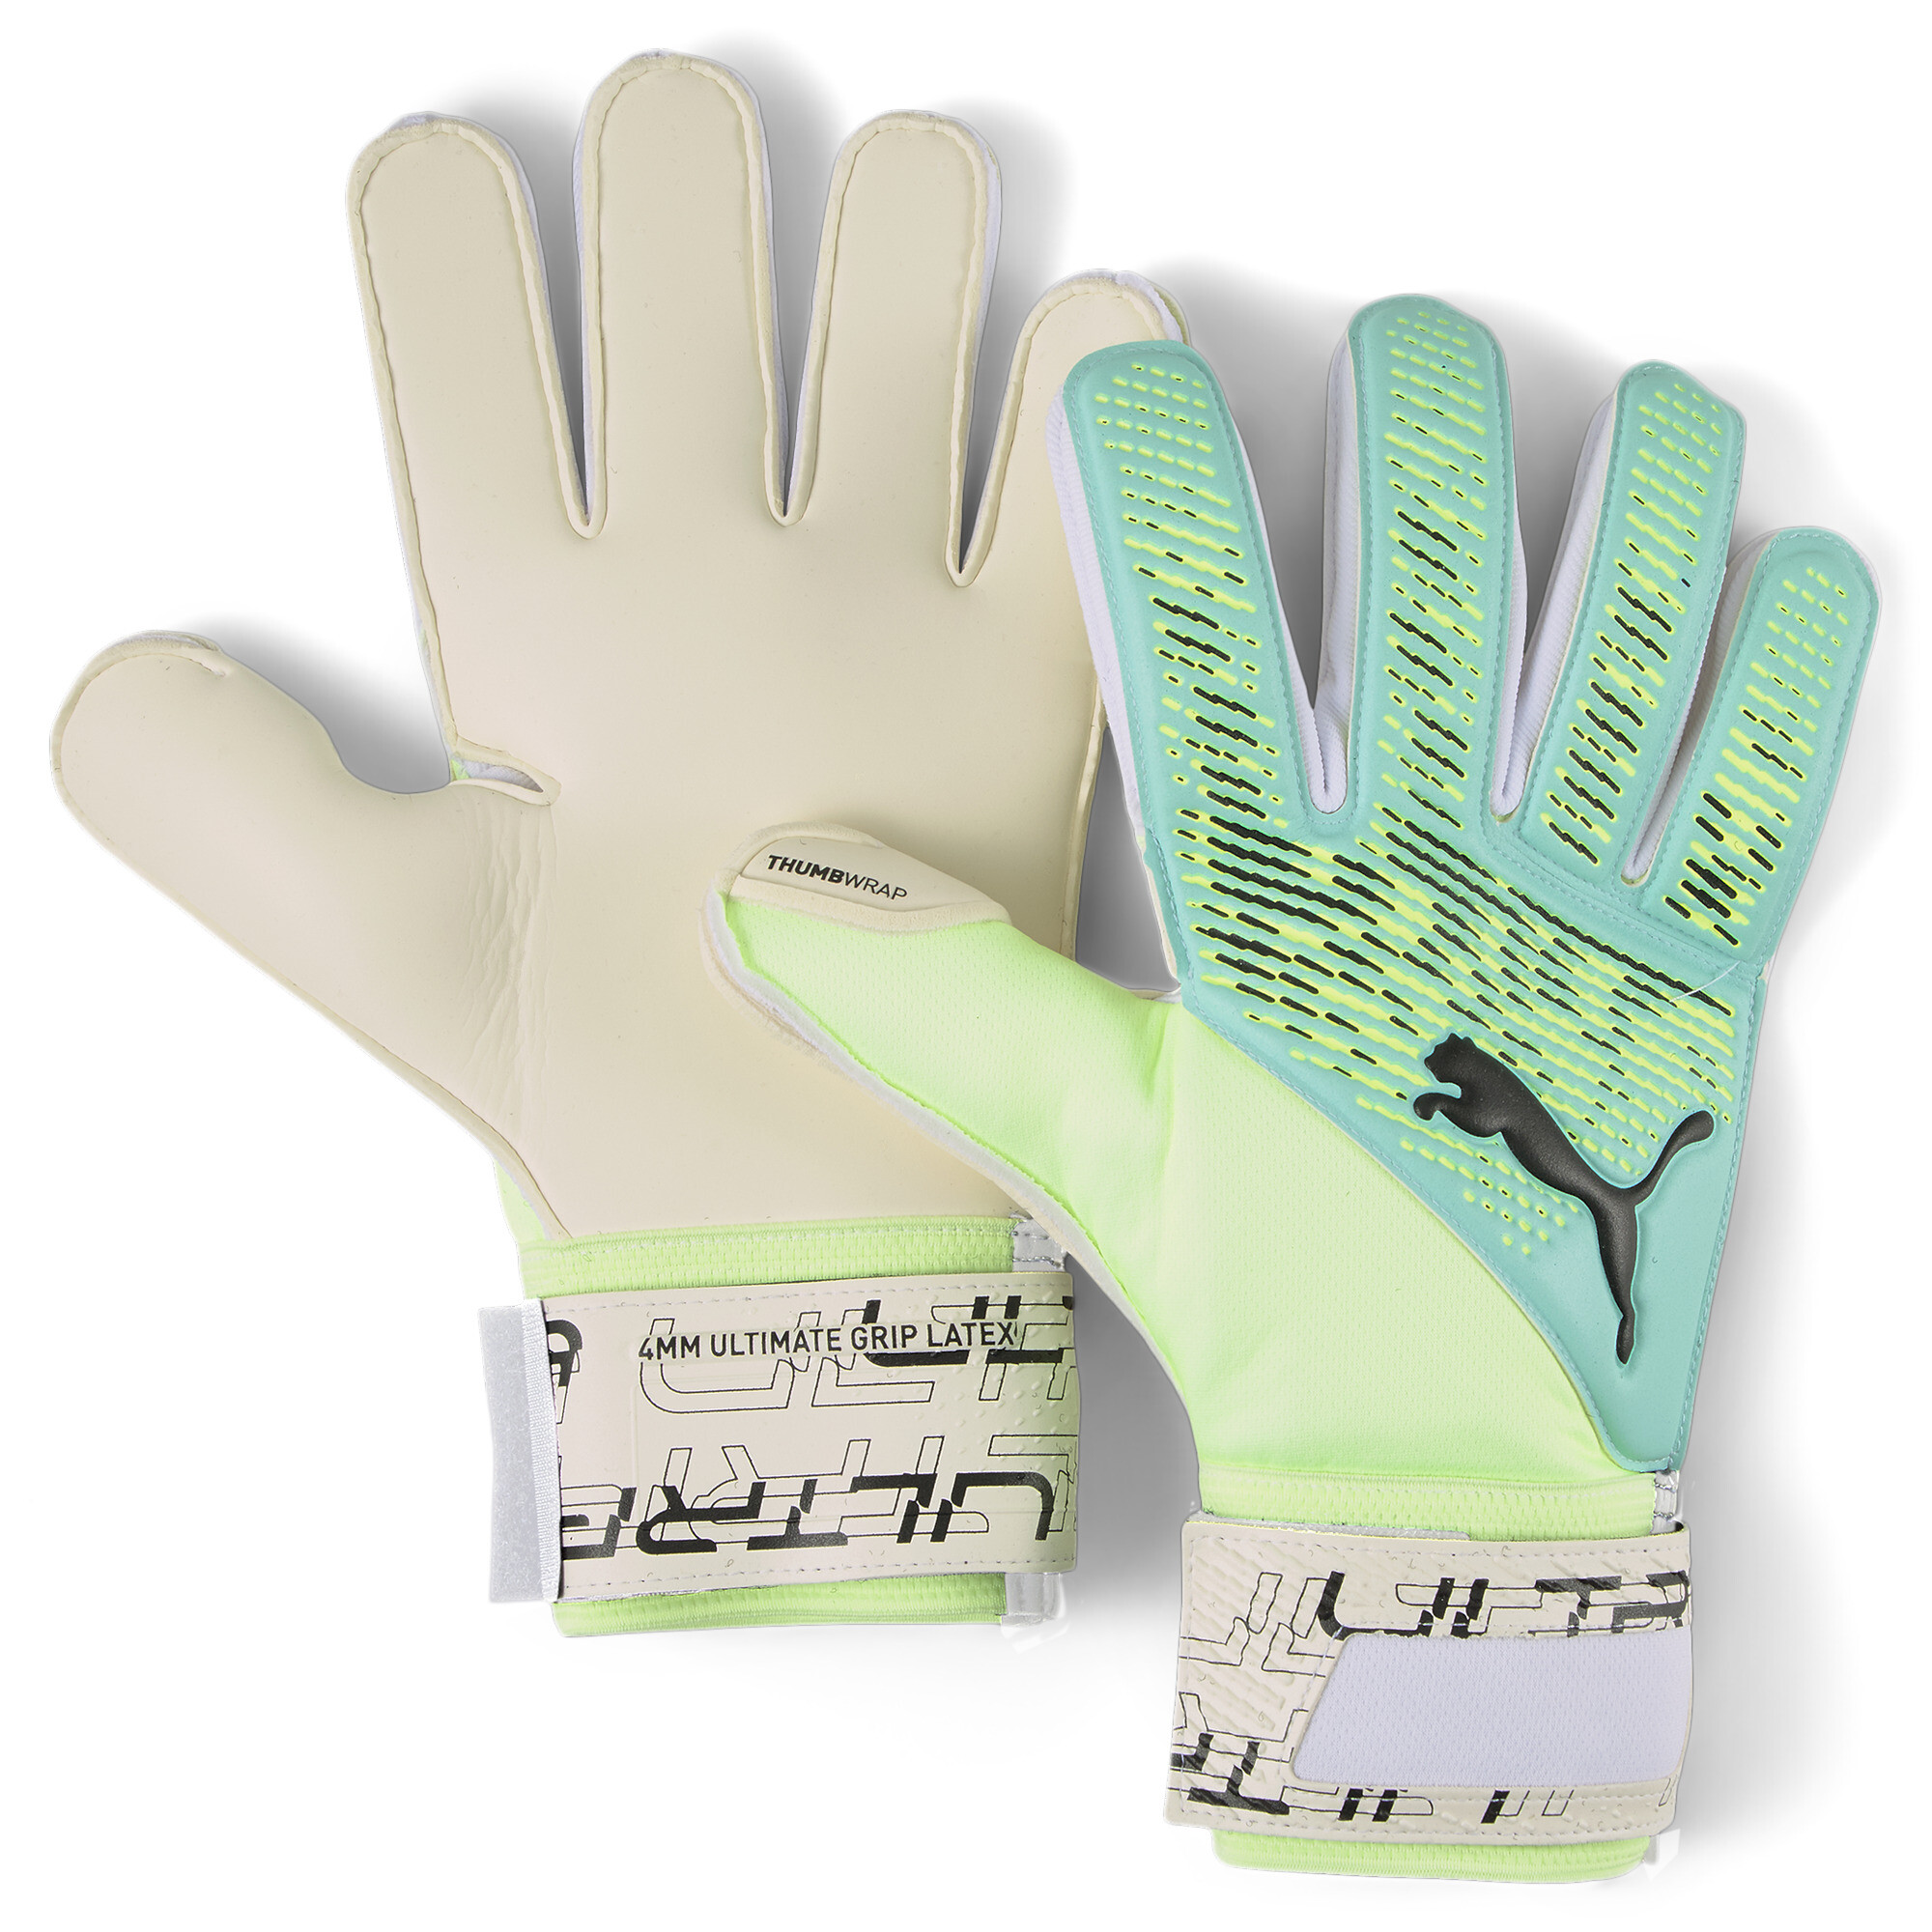 Puma ULTRA Grip 2 RC Goalkeeper Gloves, Green, Size 7, Accessories